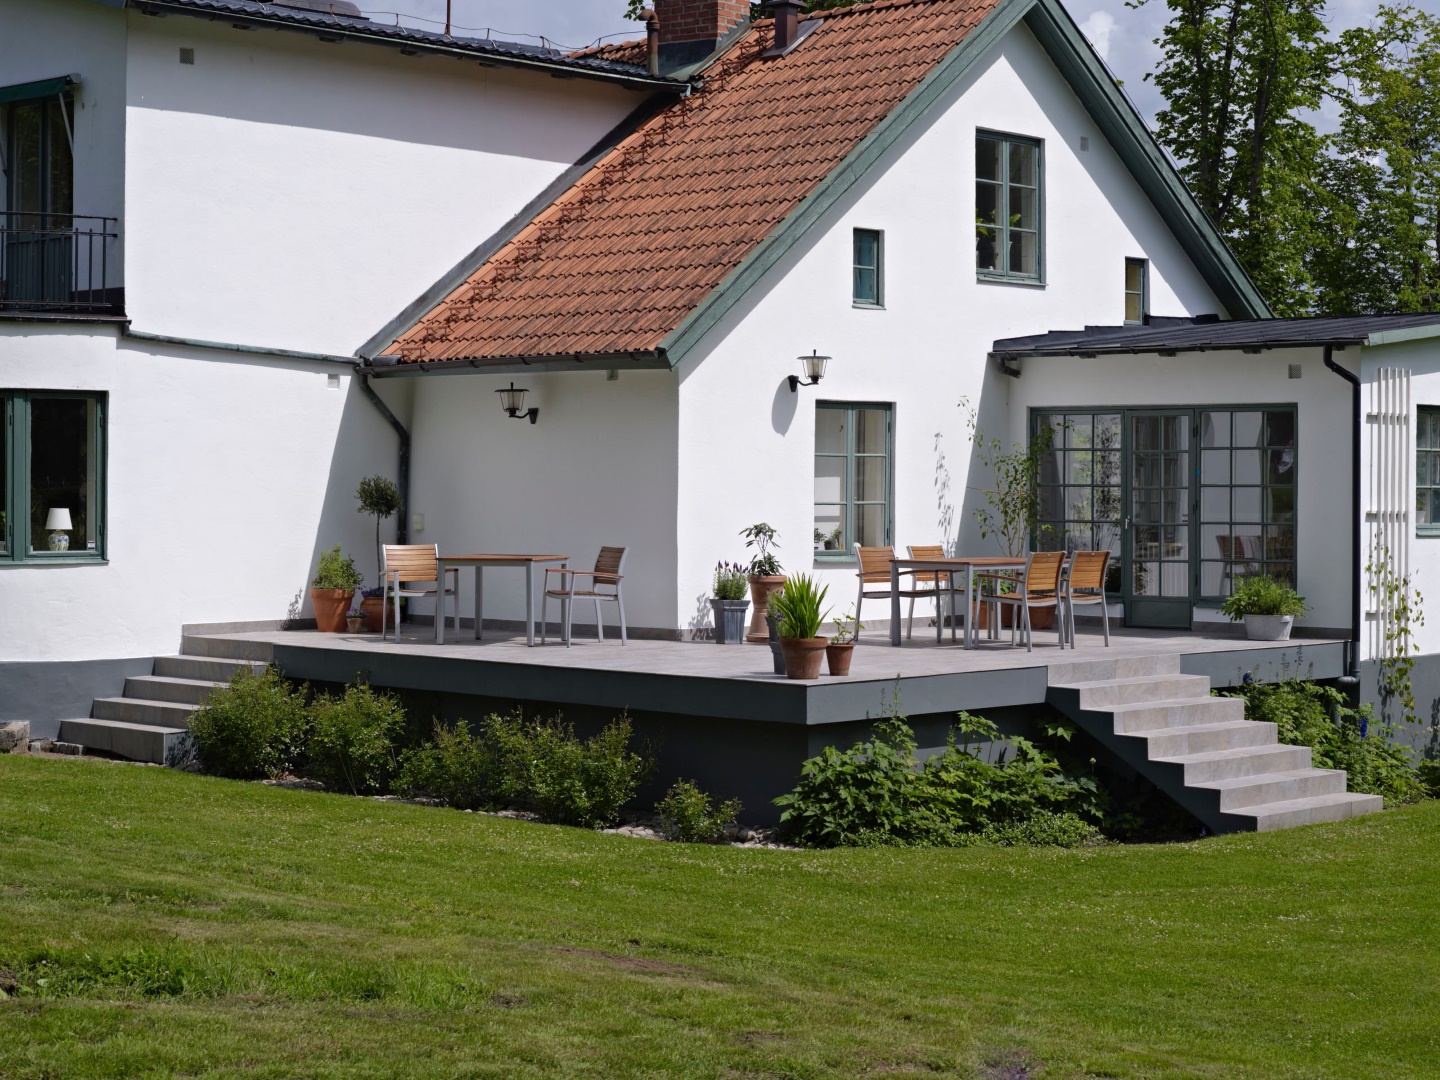 17 Stunning Scandinavian Patio Ideas to Transform Your Outdoor Space